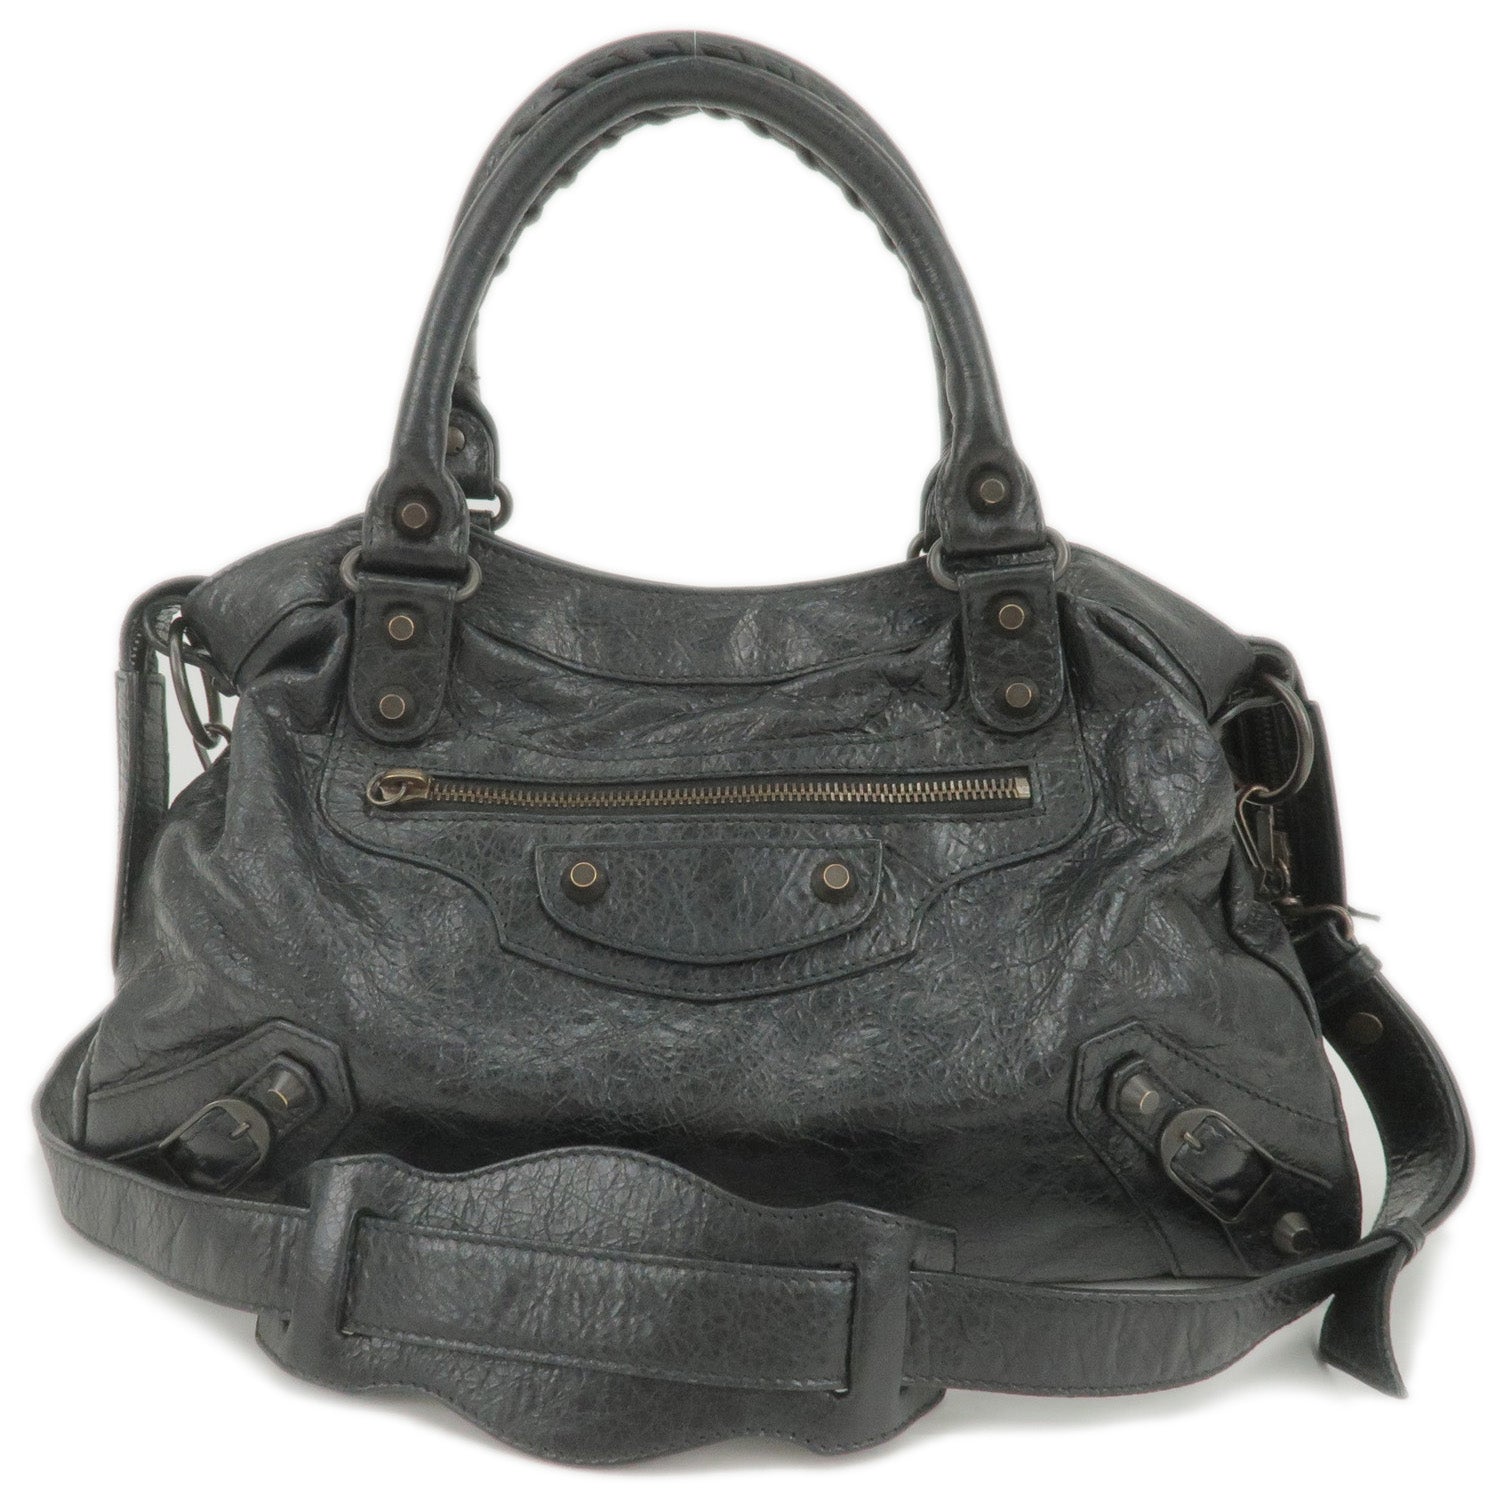 240579 – diesel blue - Bag - Black - 2Way - The - Town - Hand - Leather - medium interwoven shoulder bag Black - BALENCIAGA